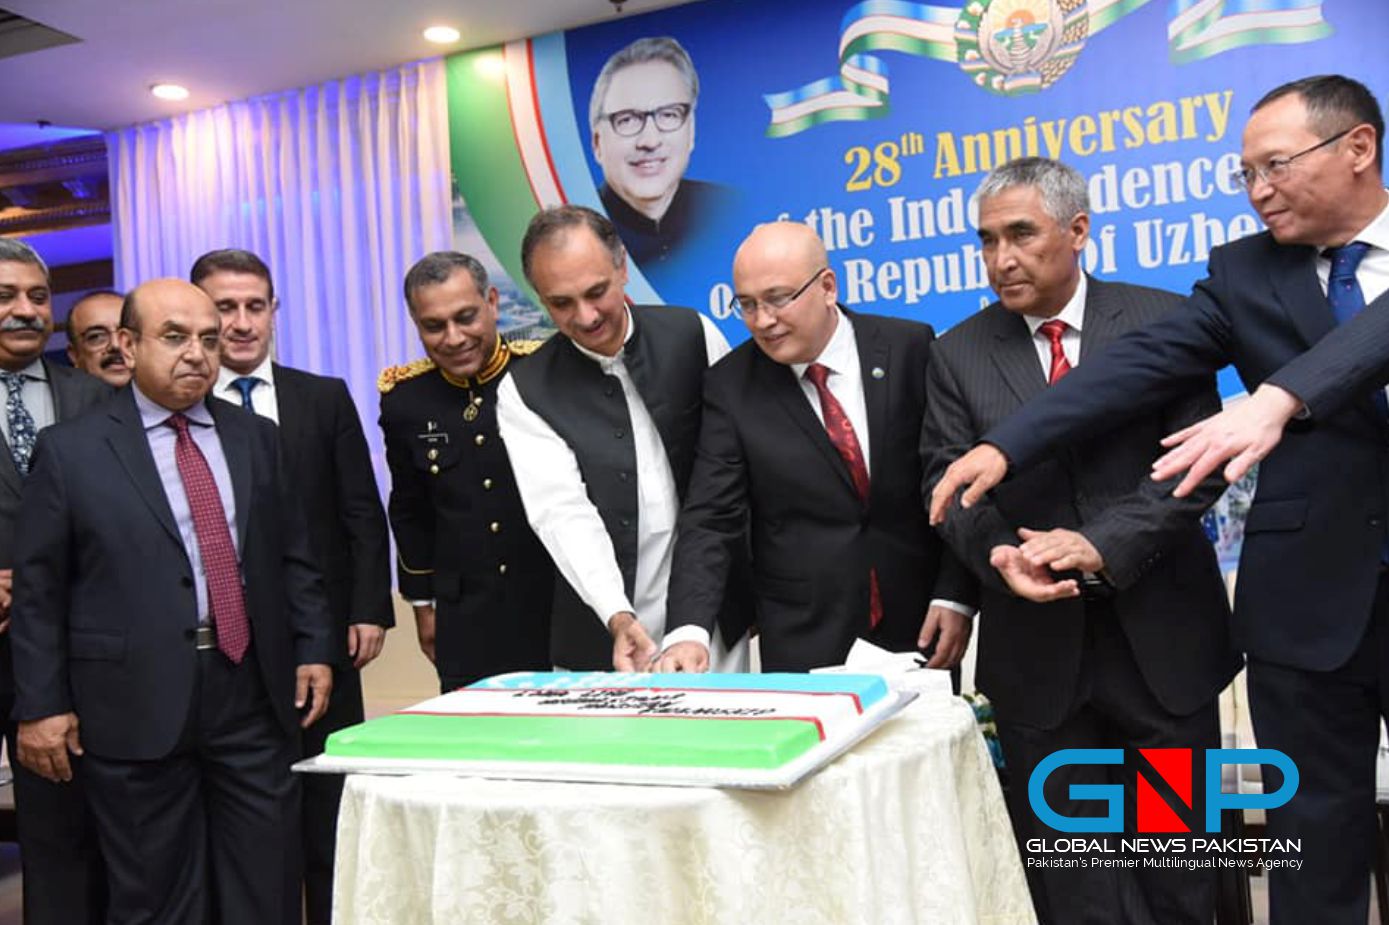 Uzbekistan celebrated 28th Independence day in Islamabad